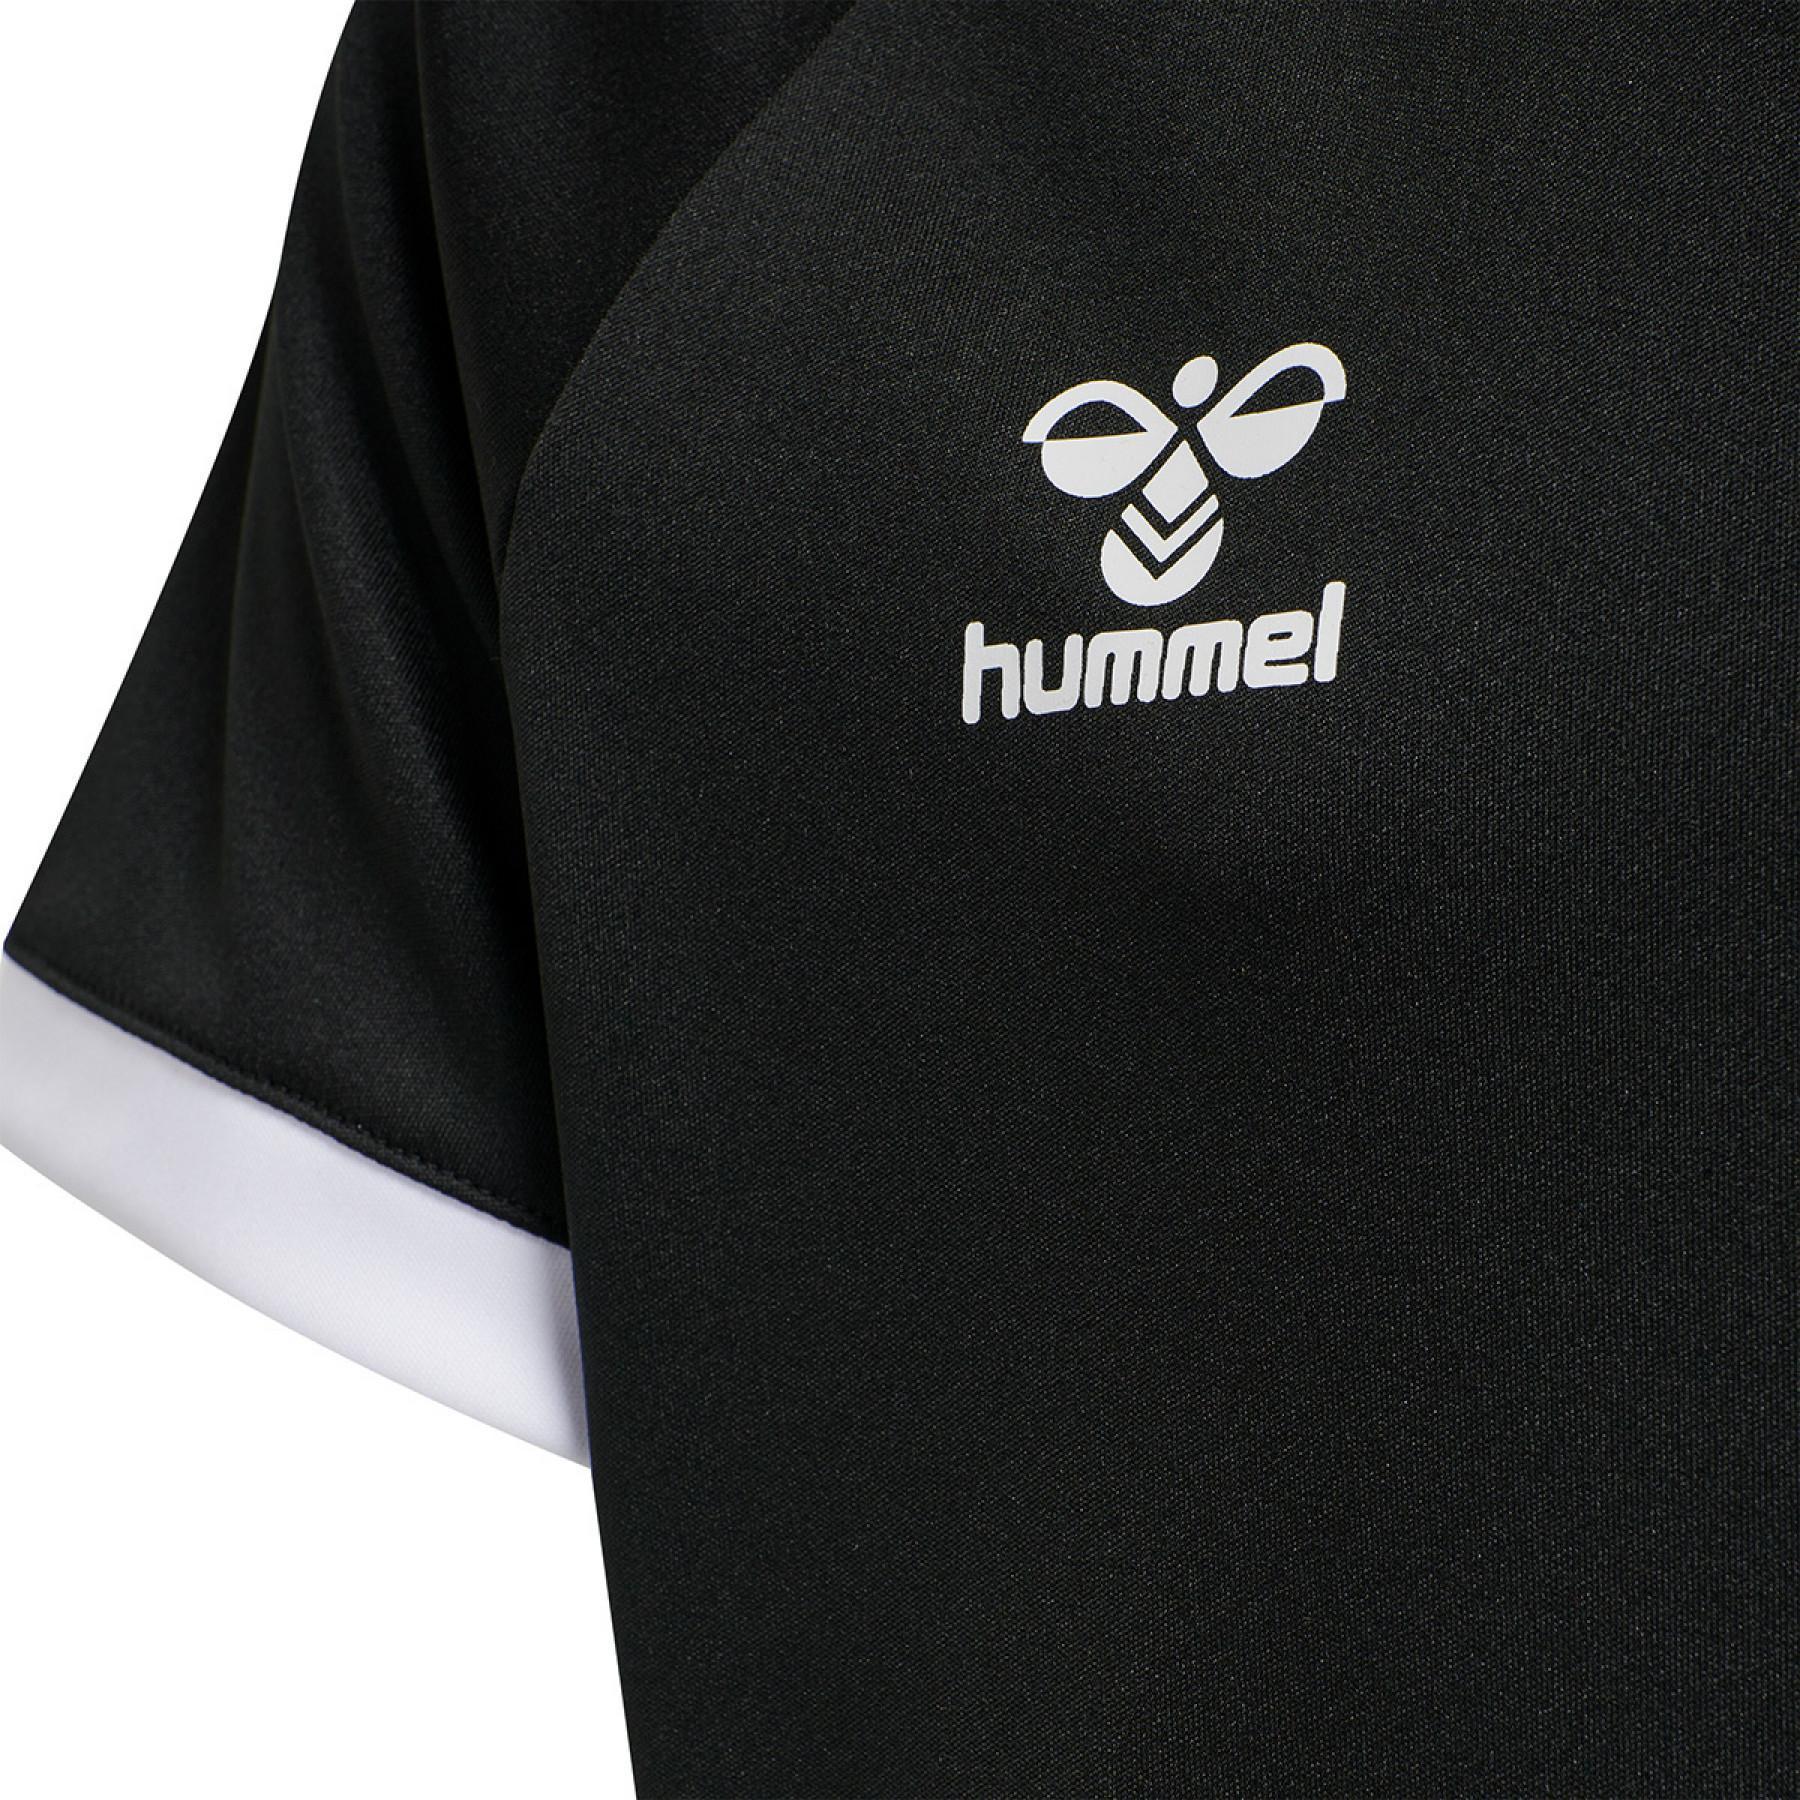 Kinder-T-shirt Hummel hmlhmlCORE volley